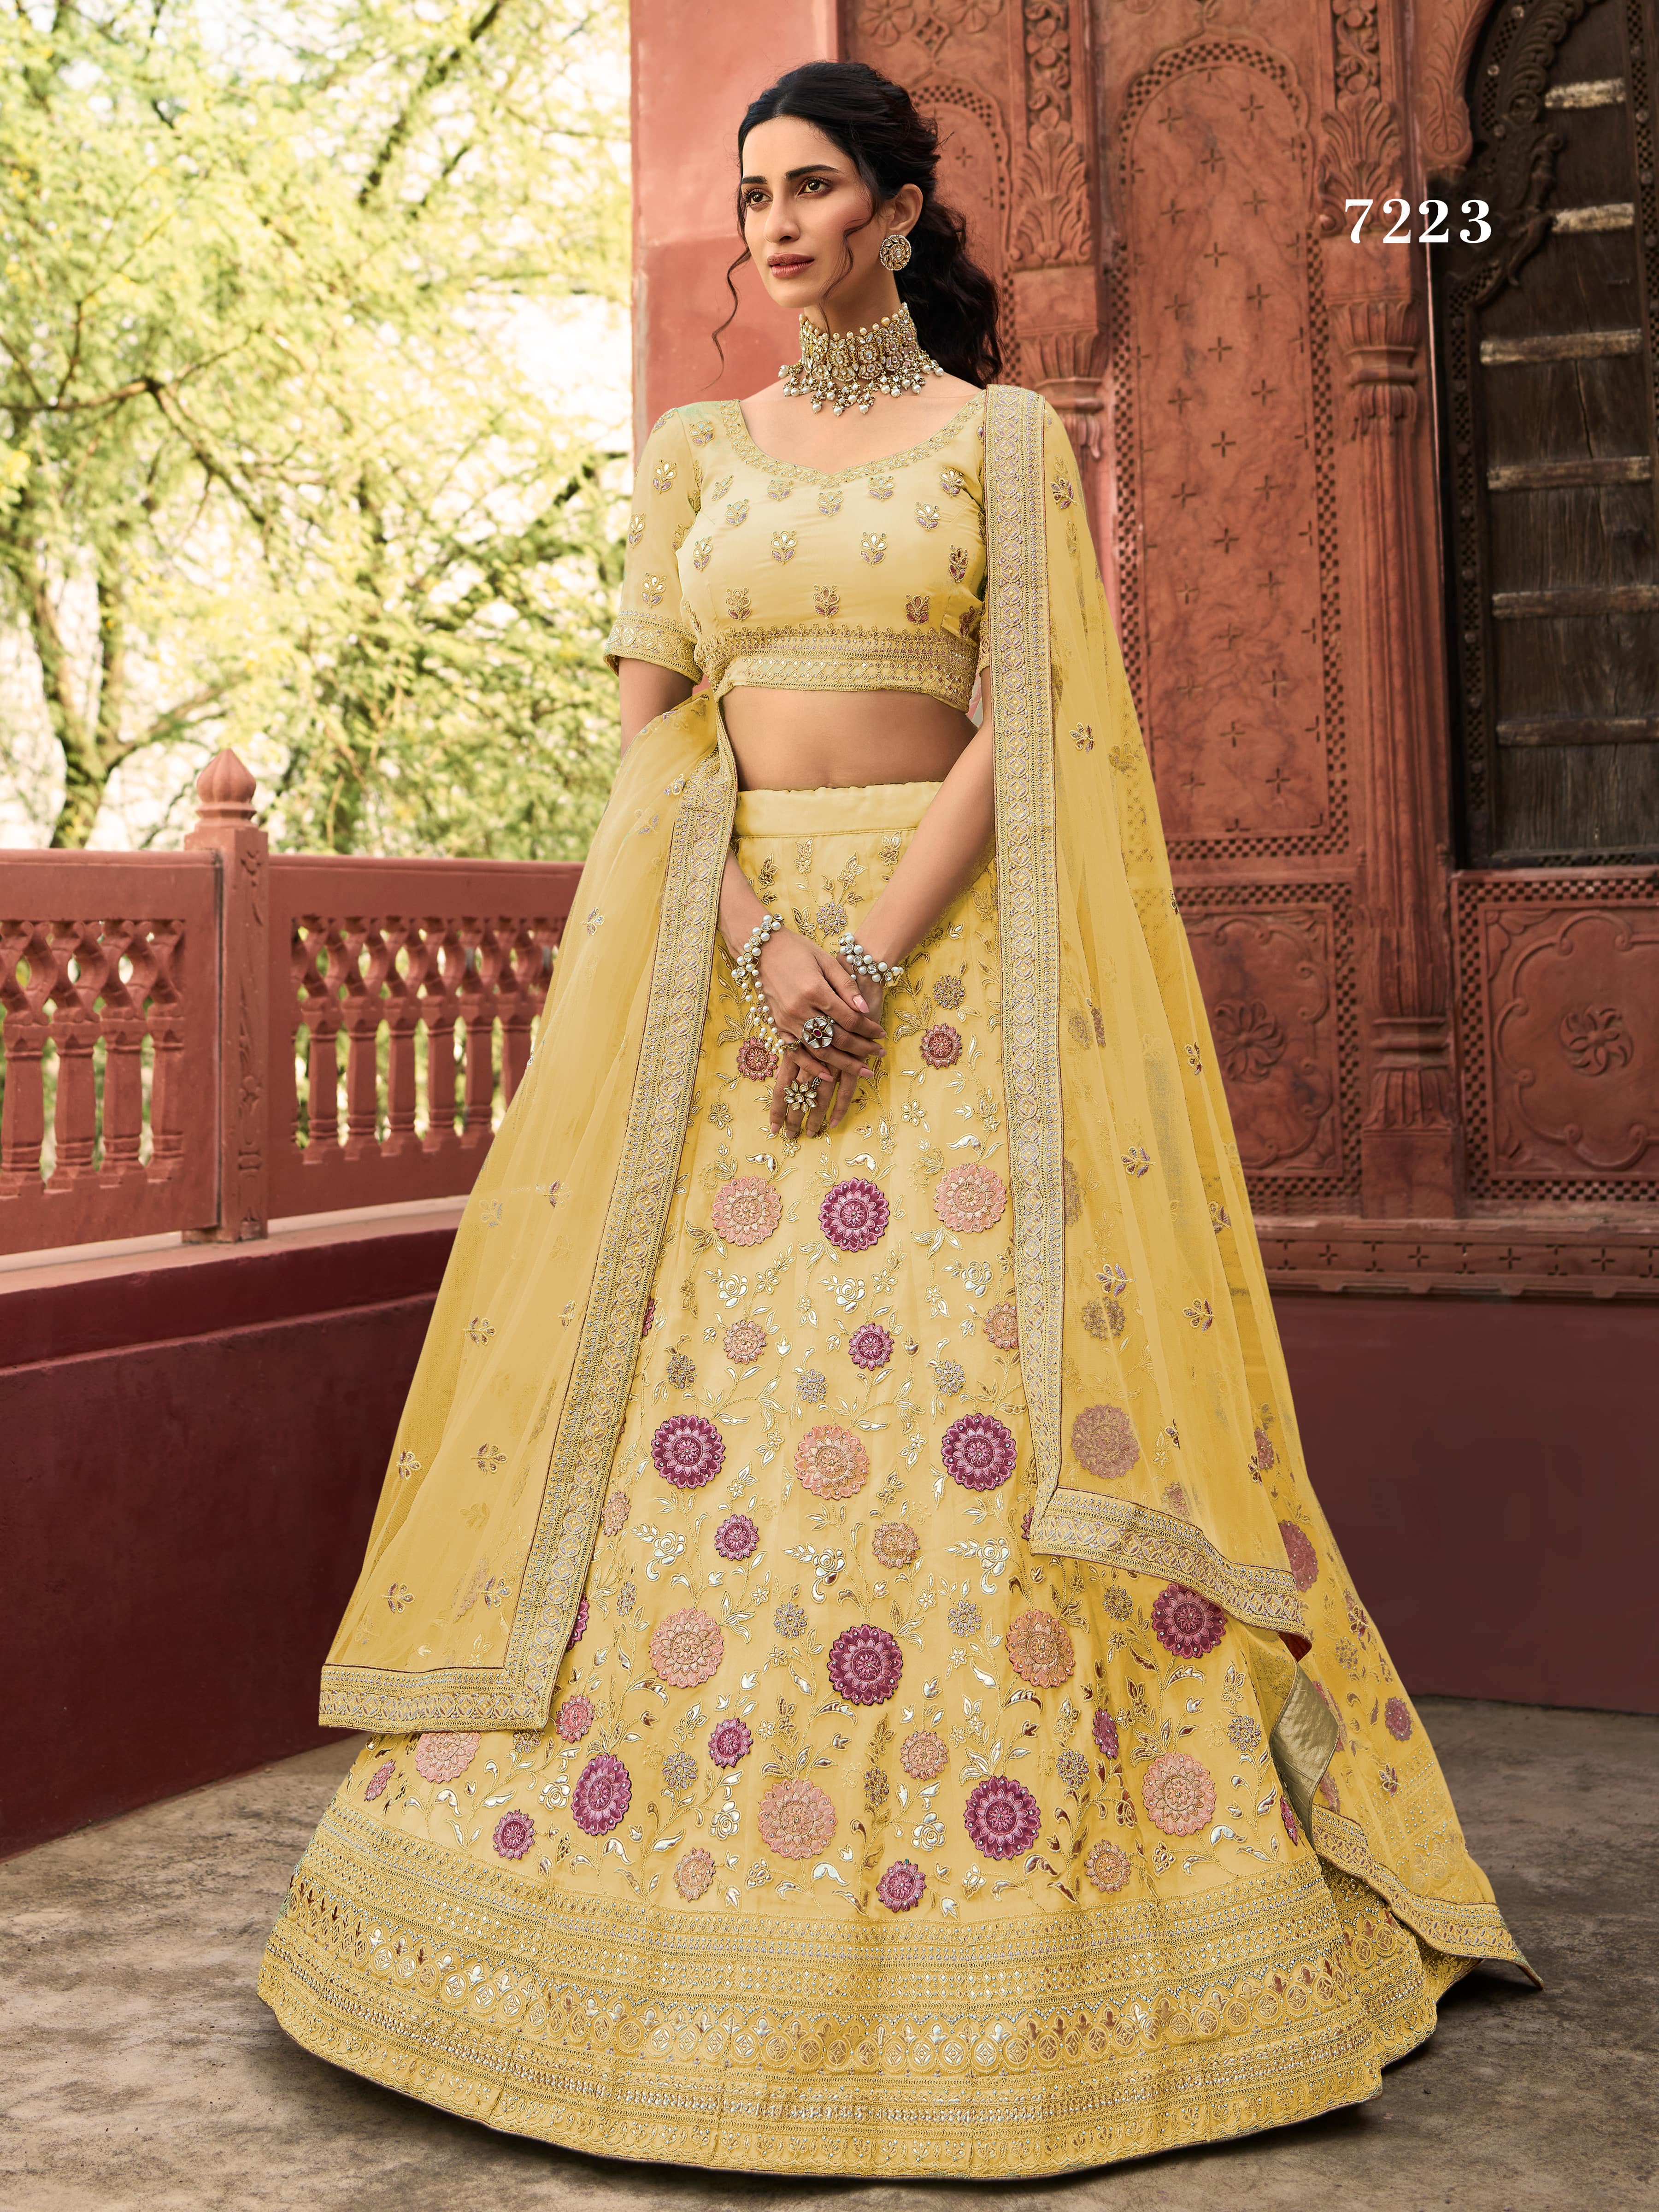 Yellow Gujrati Lehanga for Girls online at low price – fancydresswale.com